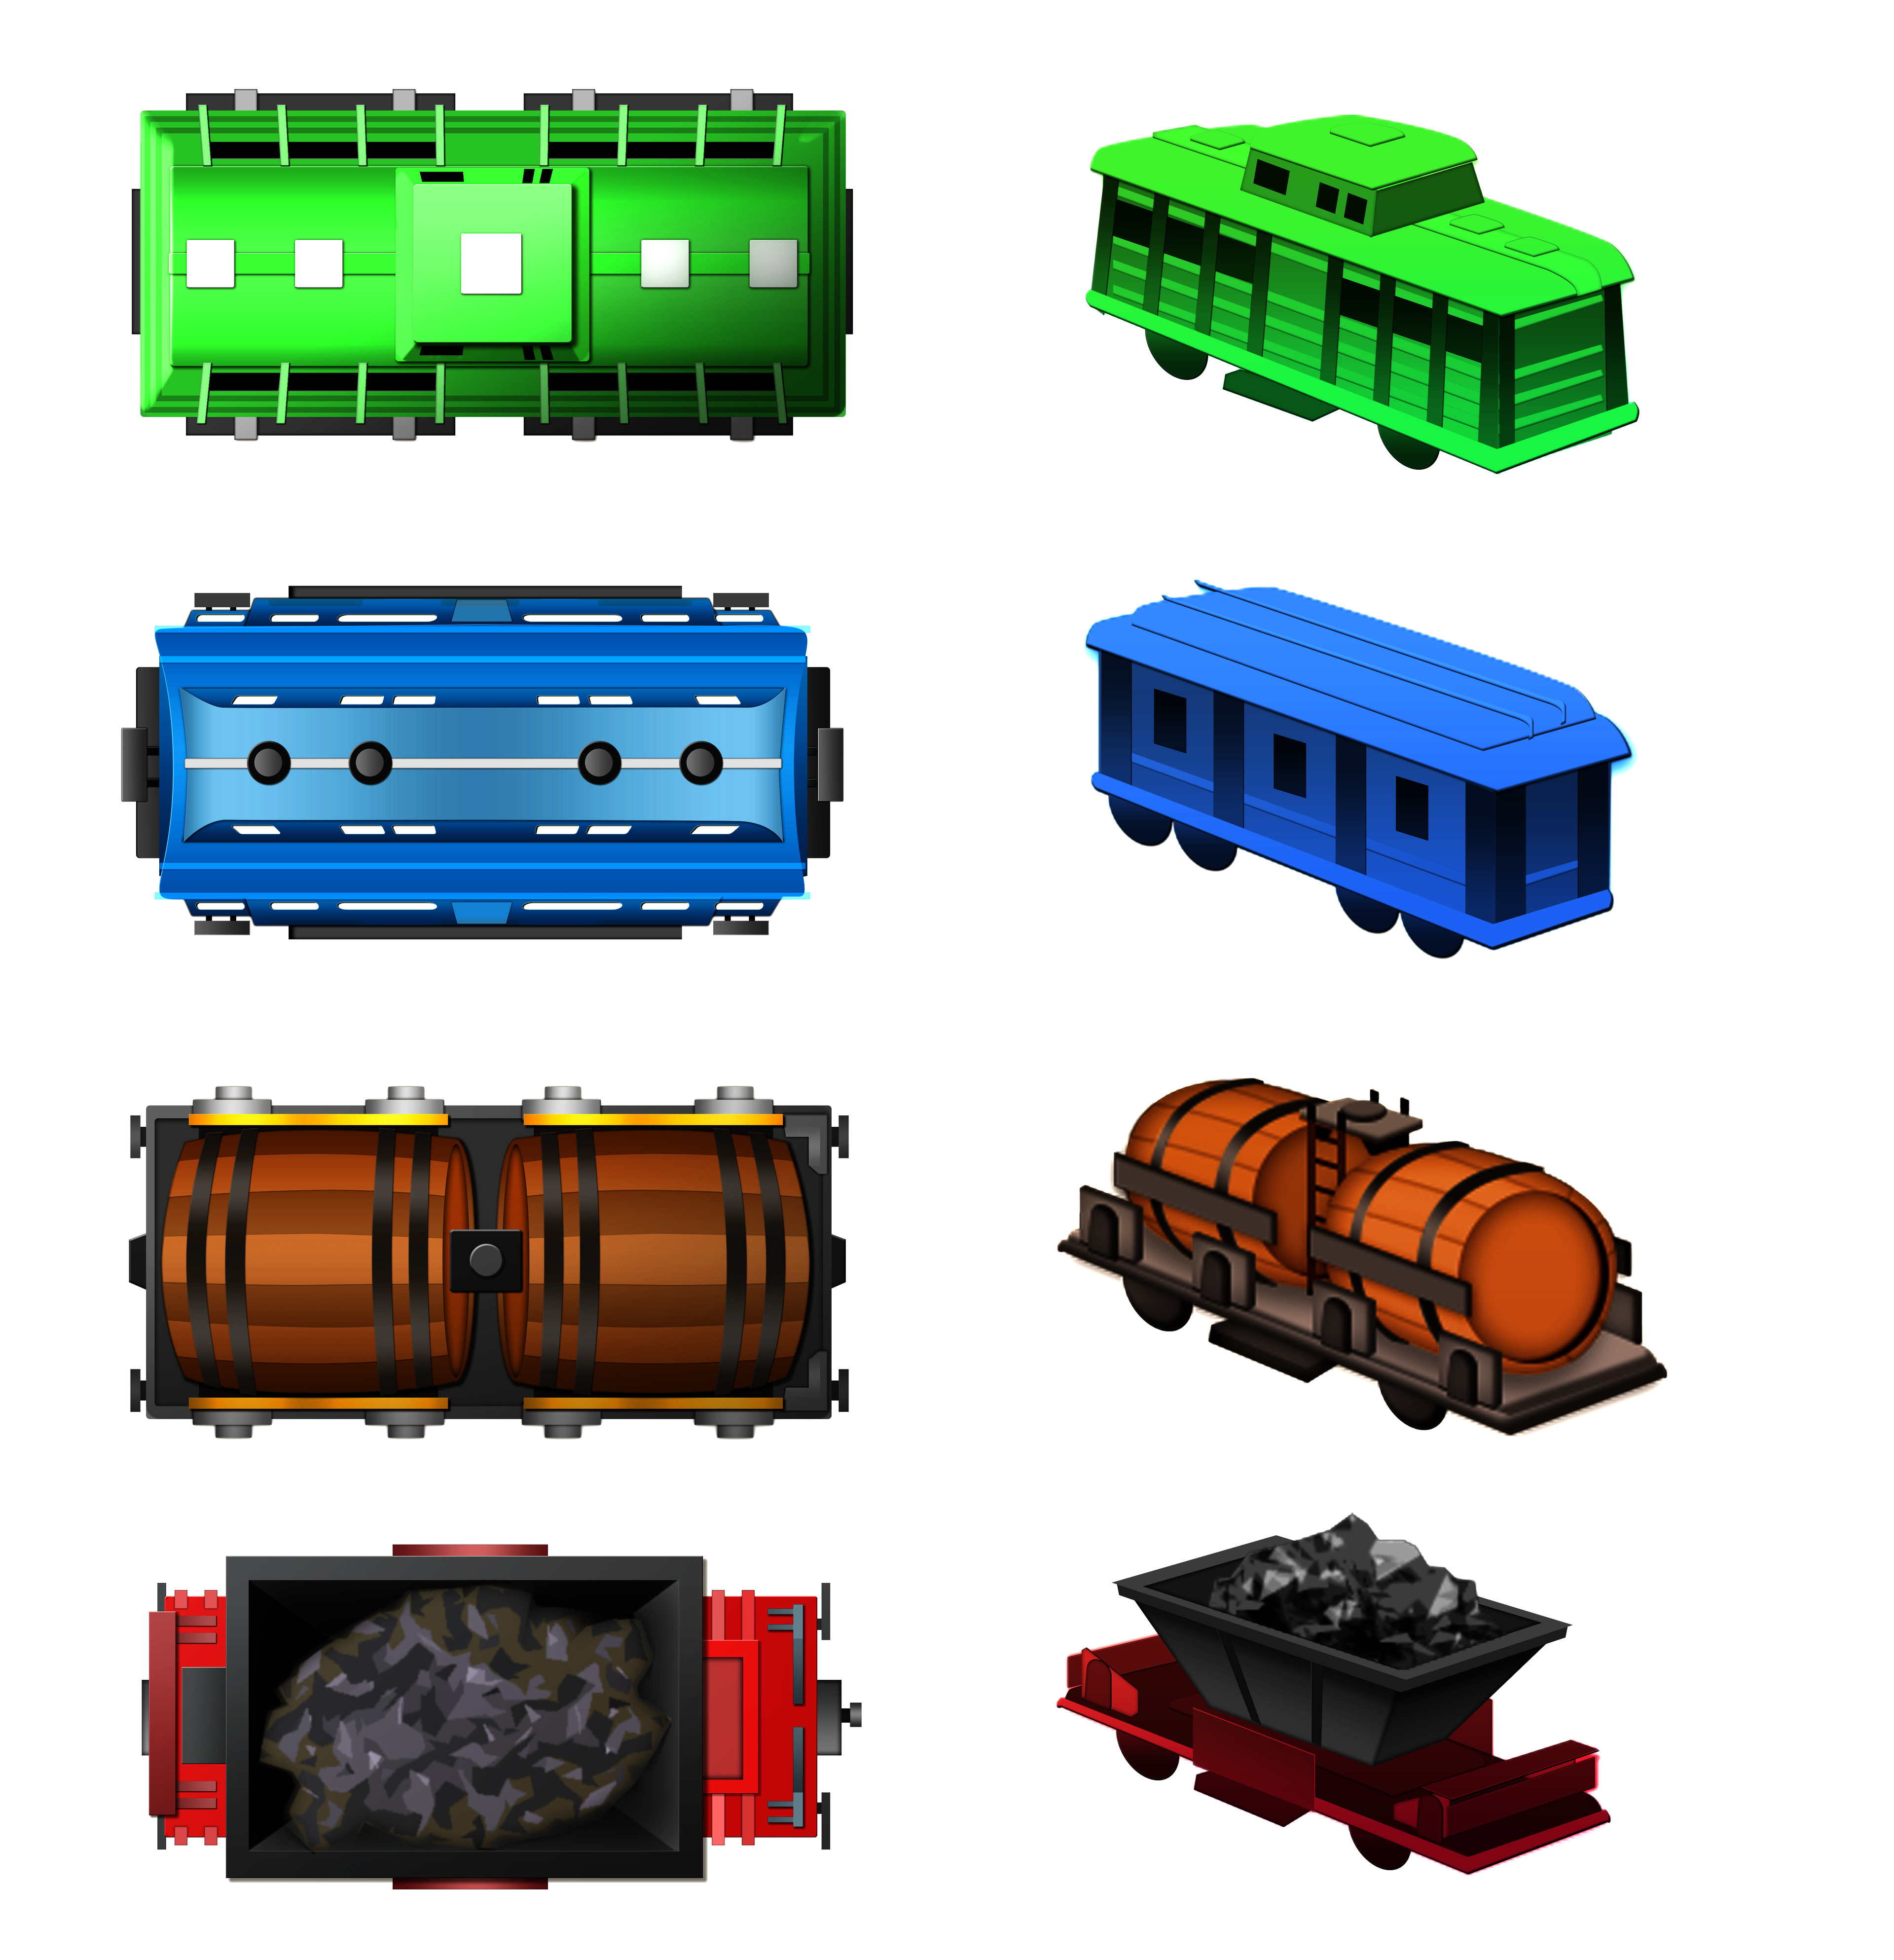 Here are ehe train icons I created.